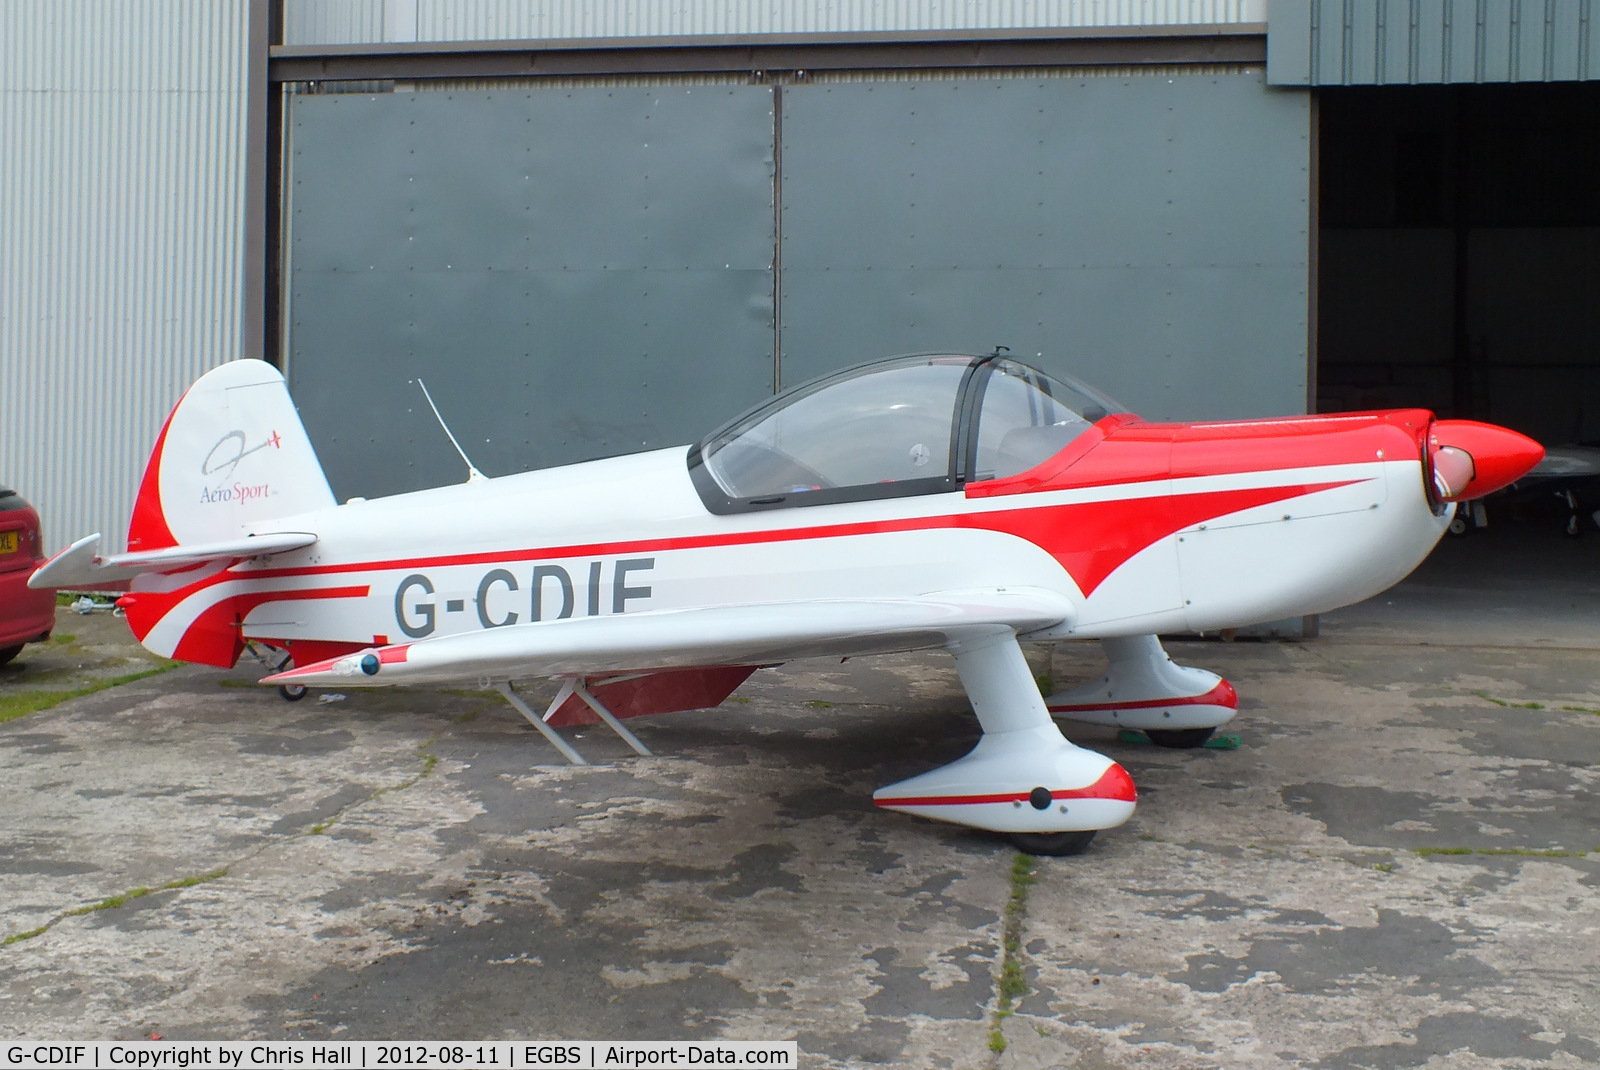 G-CDIF, 2002 Mudry CAP-10B C/N 302, at Shobdon Airfield, Herefordshire